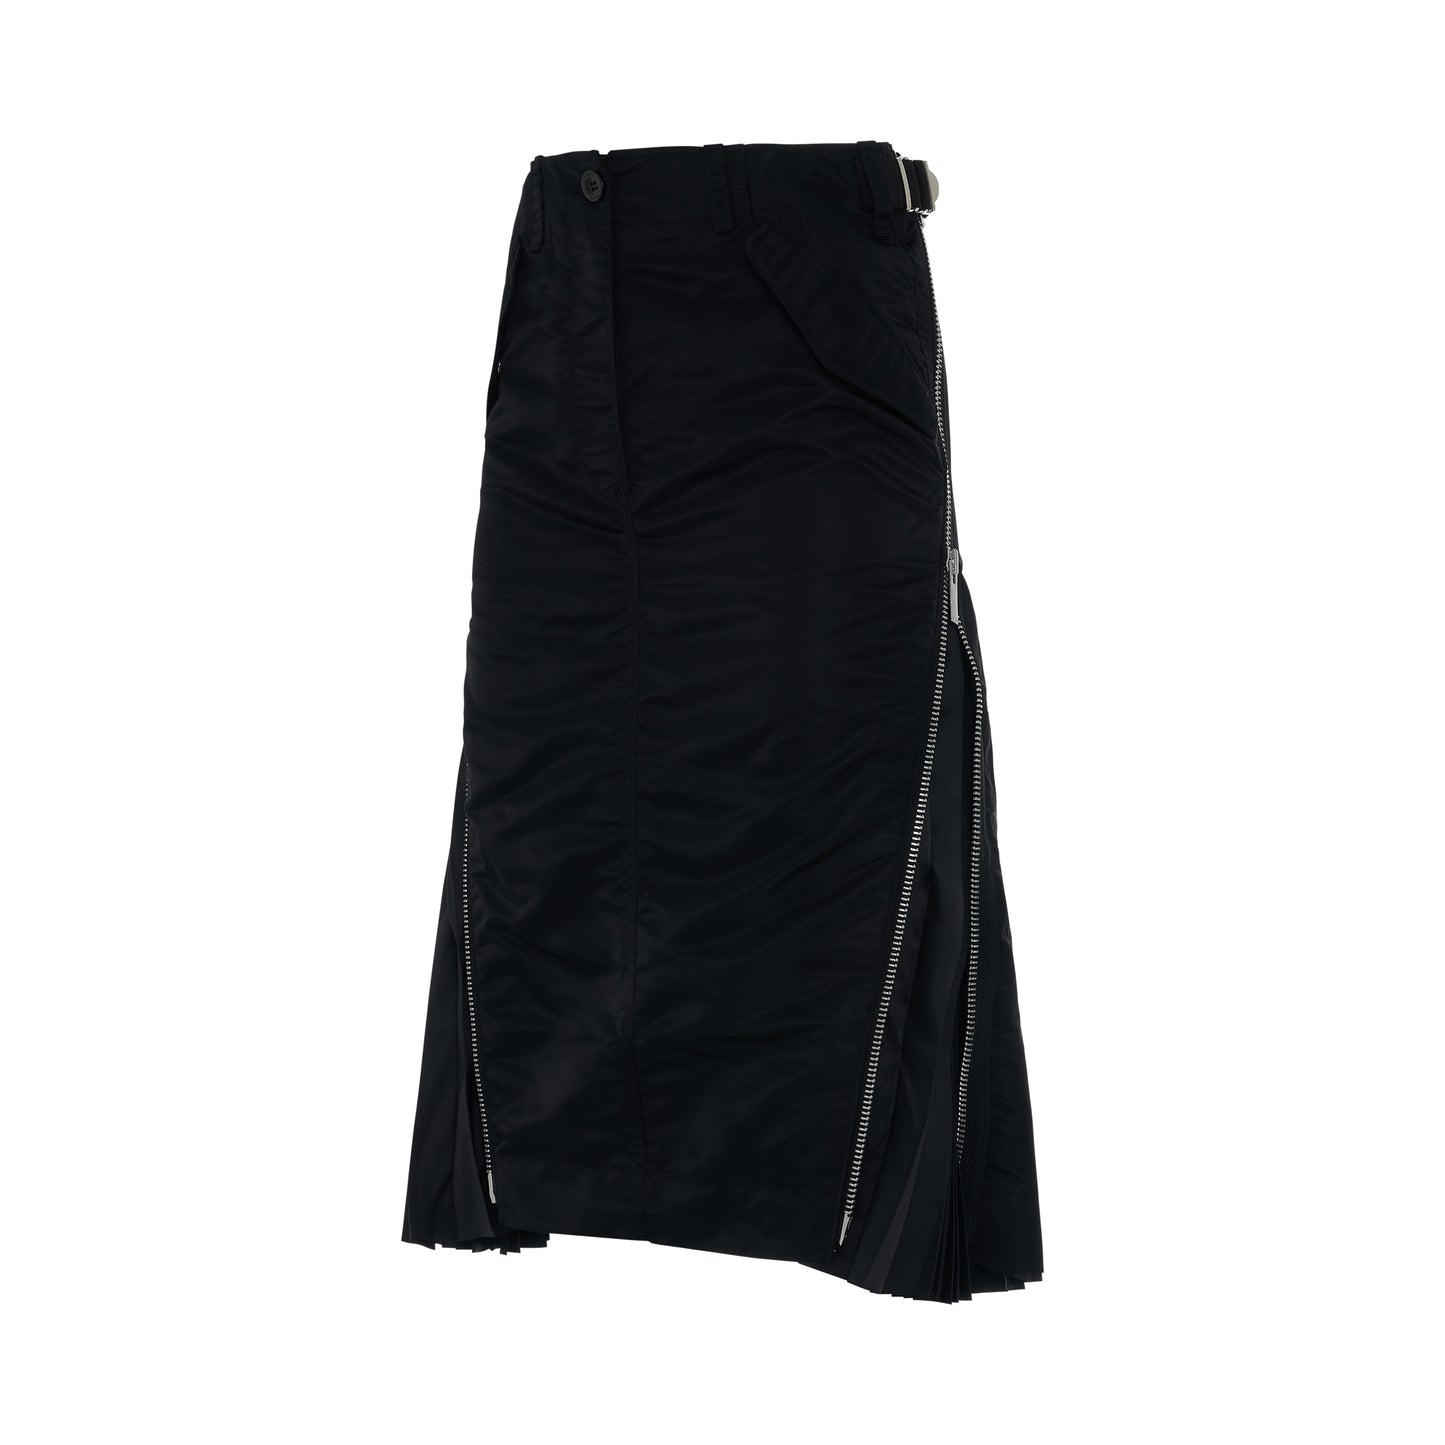 Nylon Twill Mix Skirt in Black